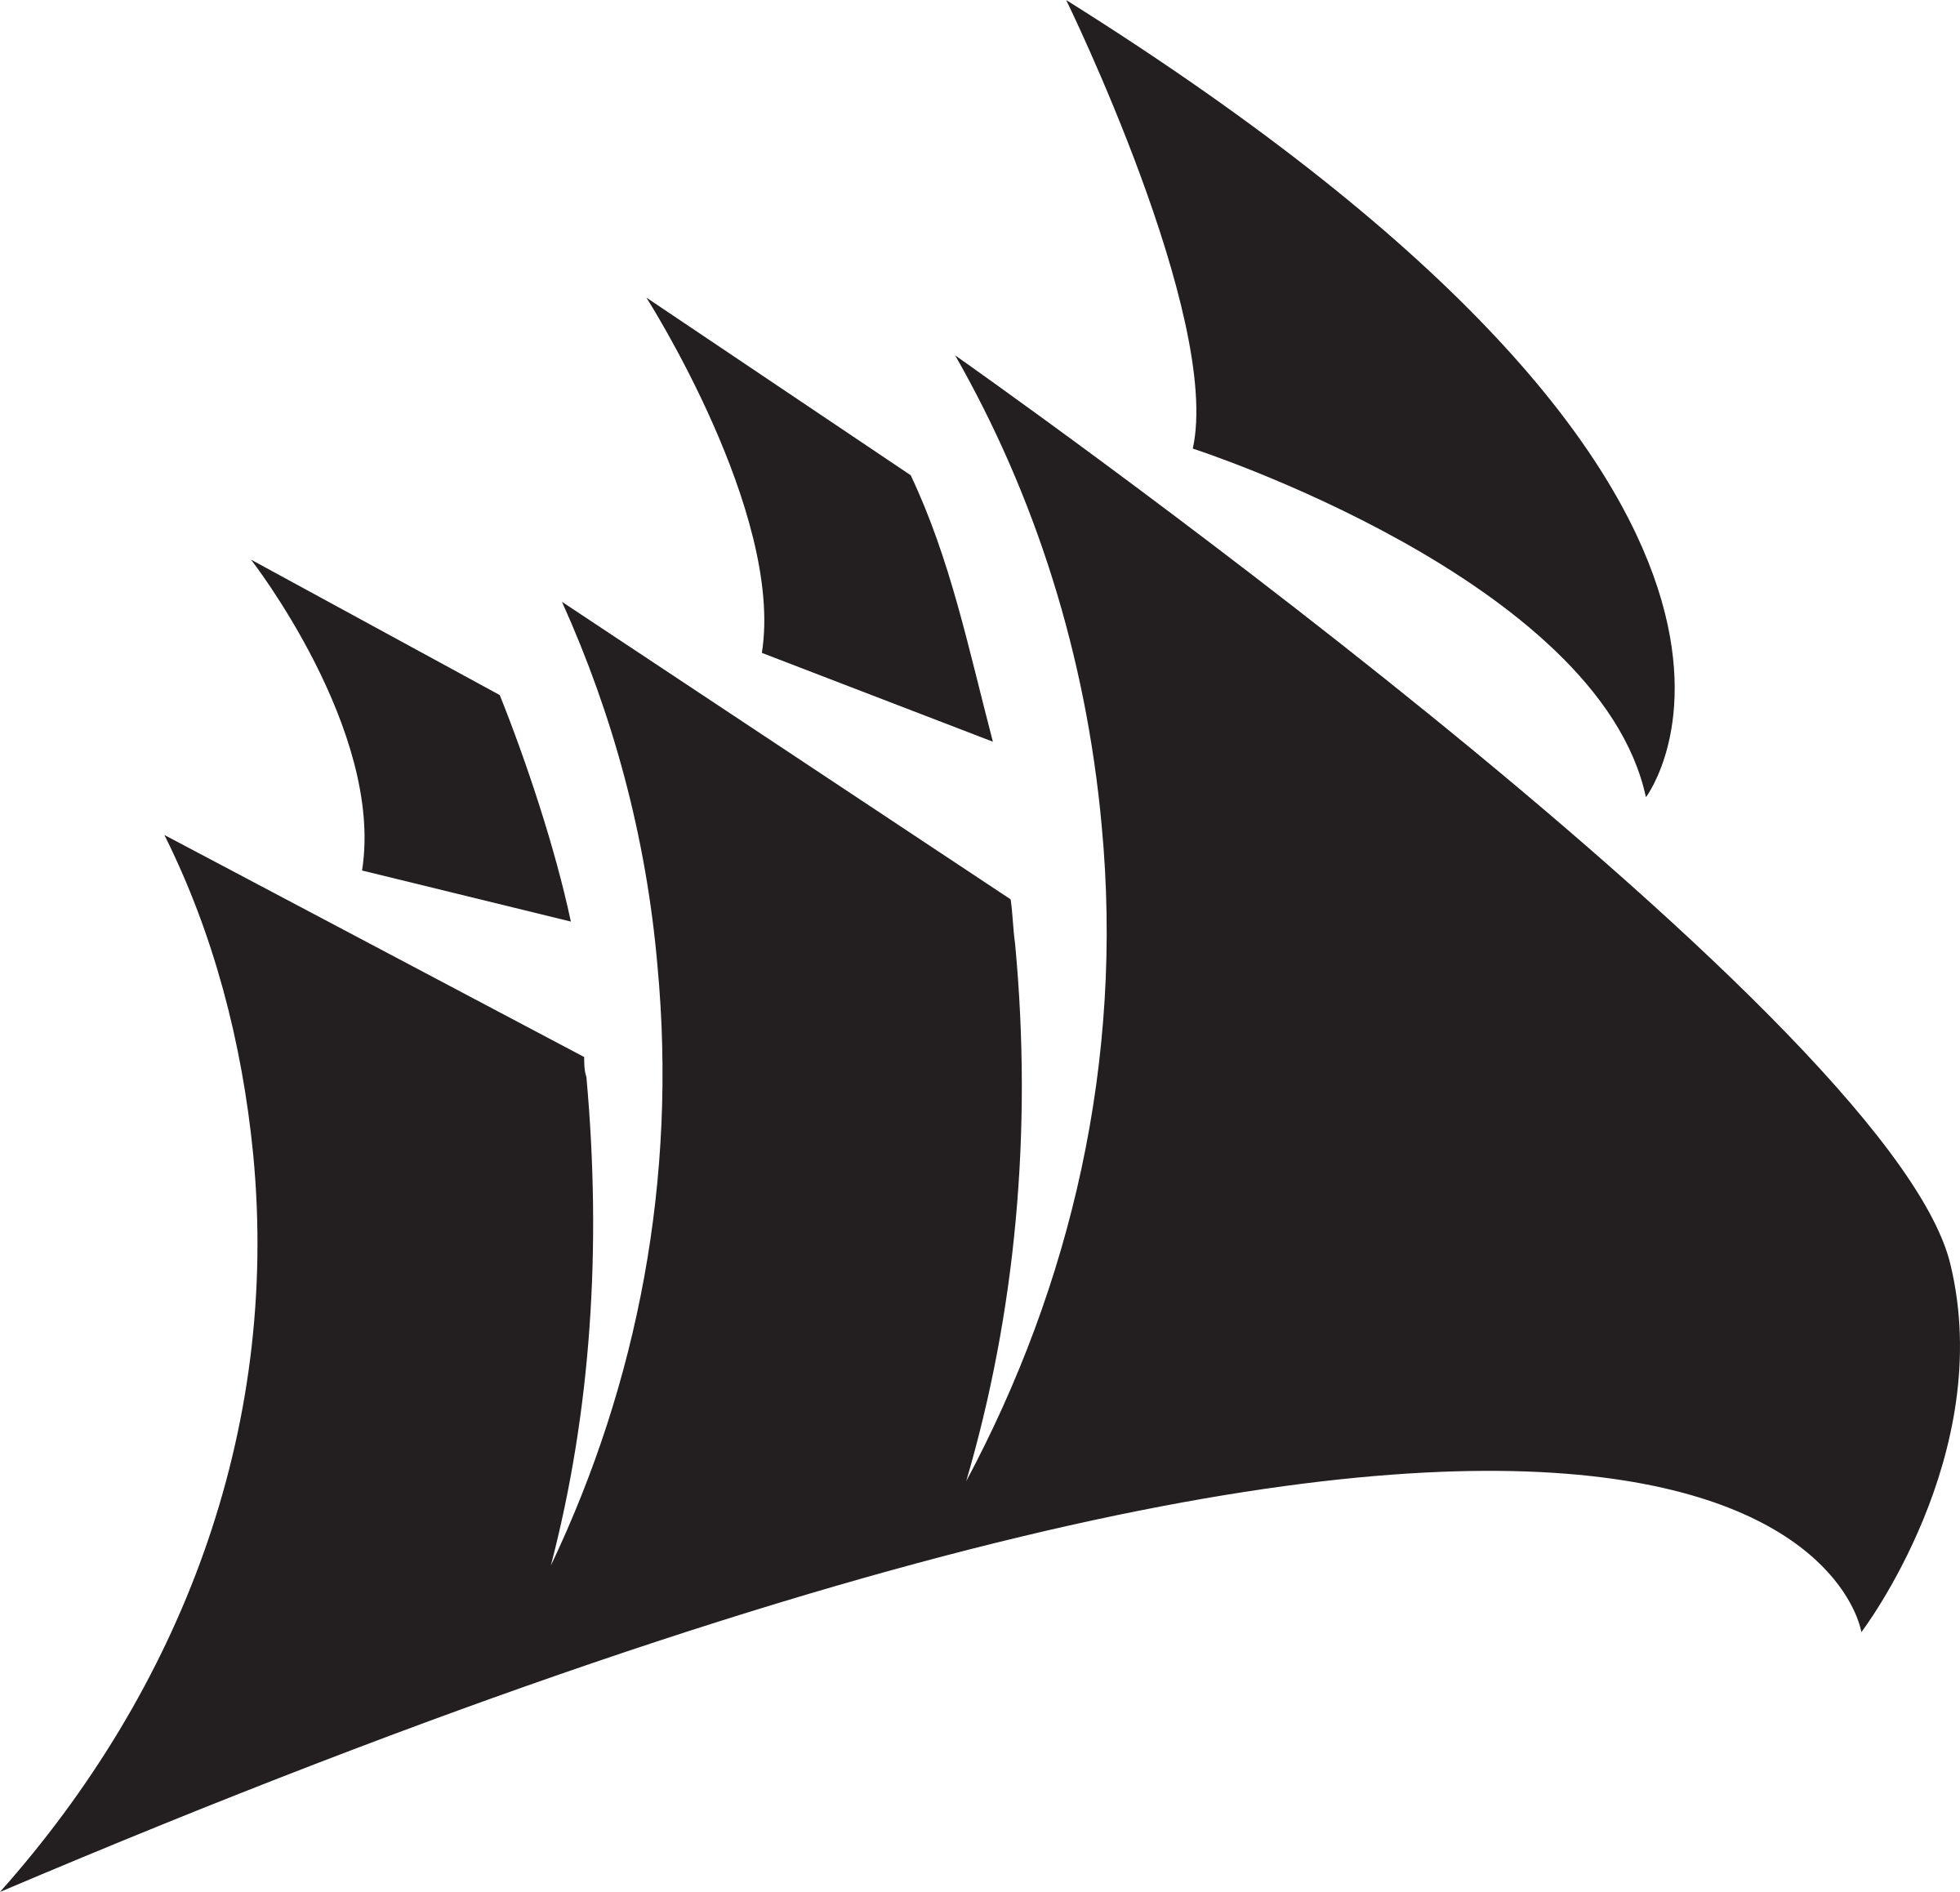 Corsair Logo Png & Downlo